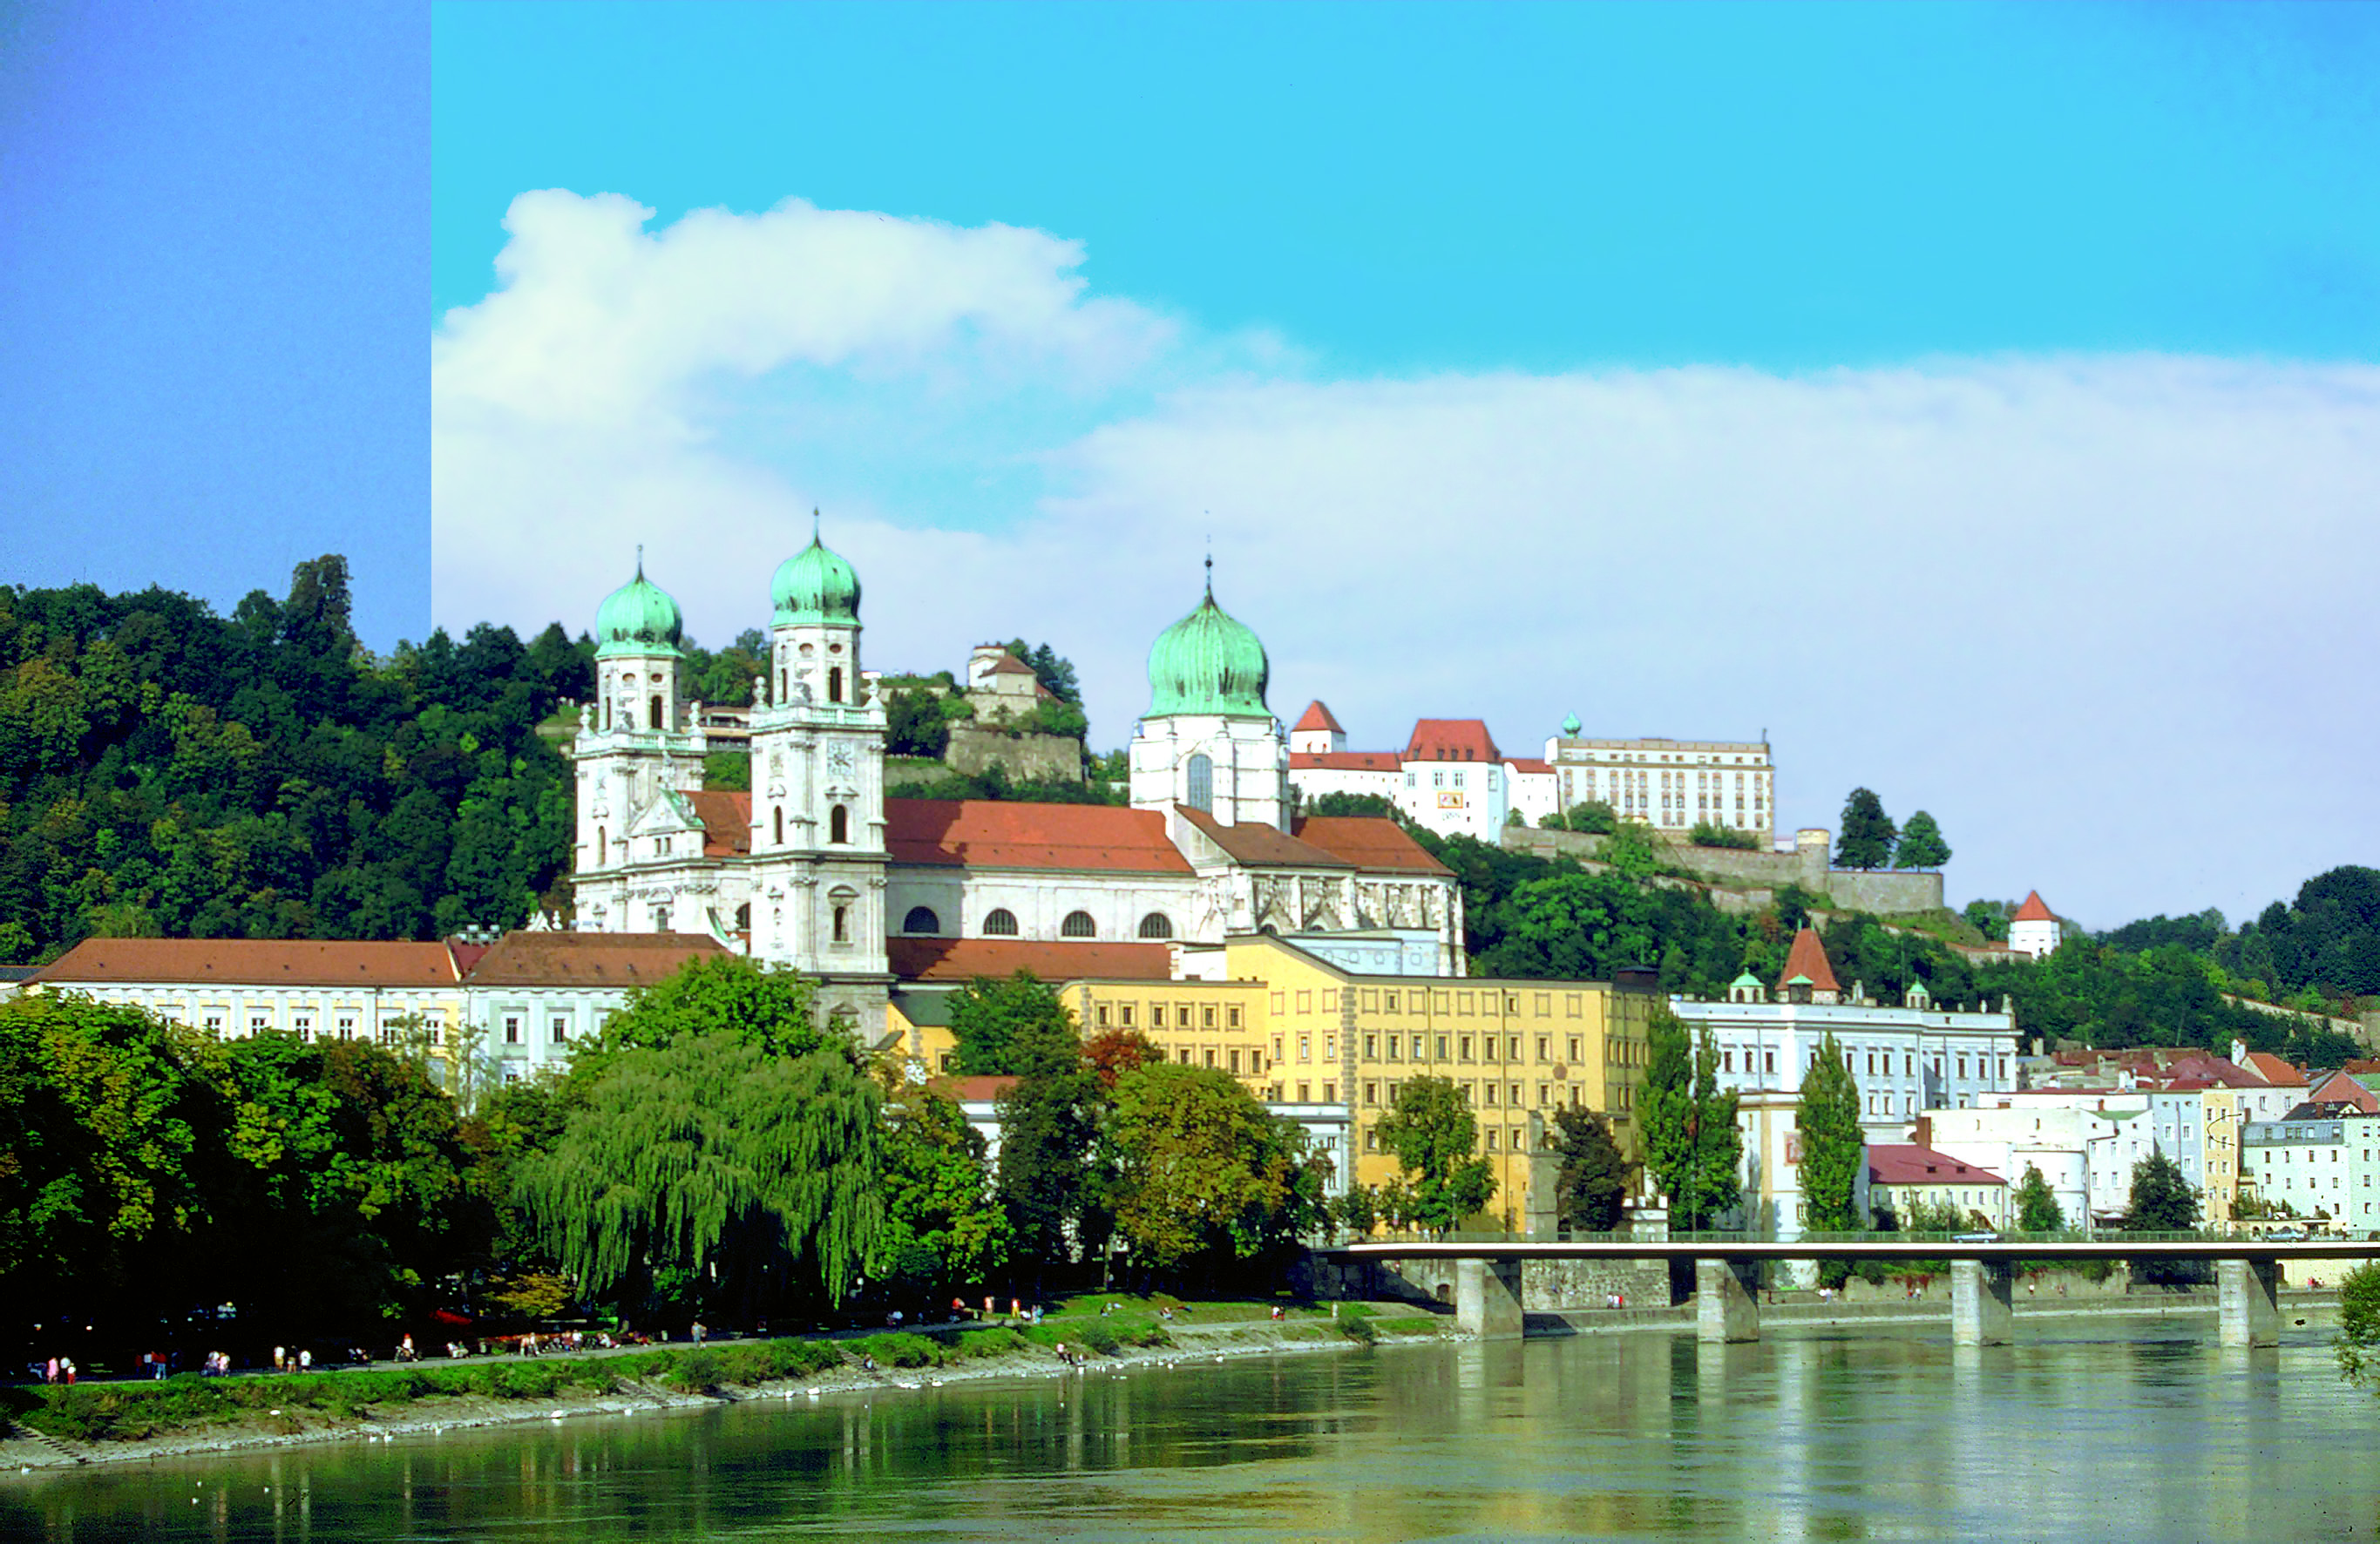 Passau-Dreiflüssestadt (30km Autobahn entfernt)